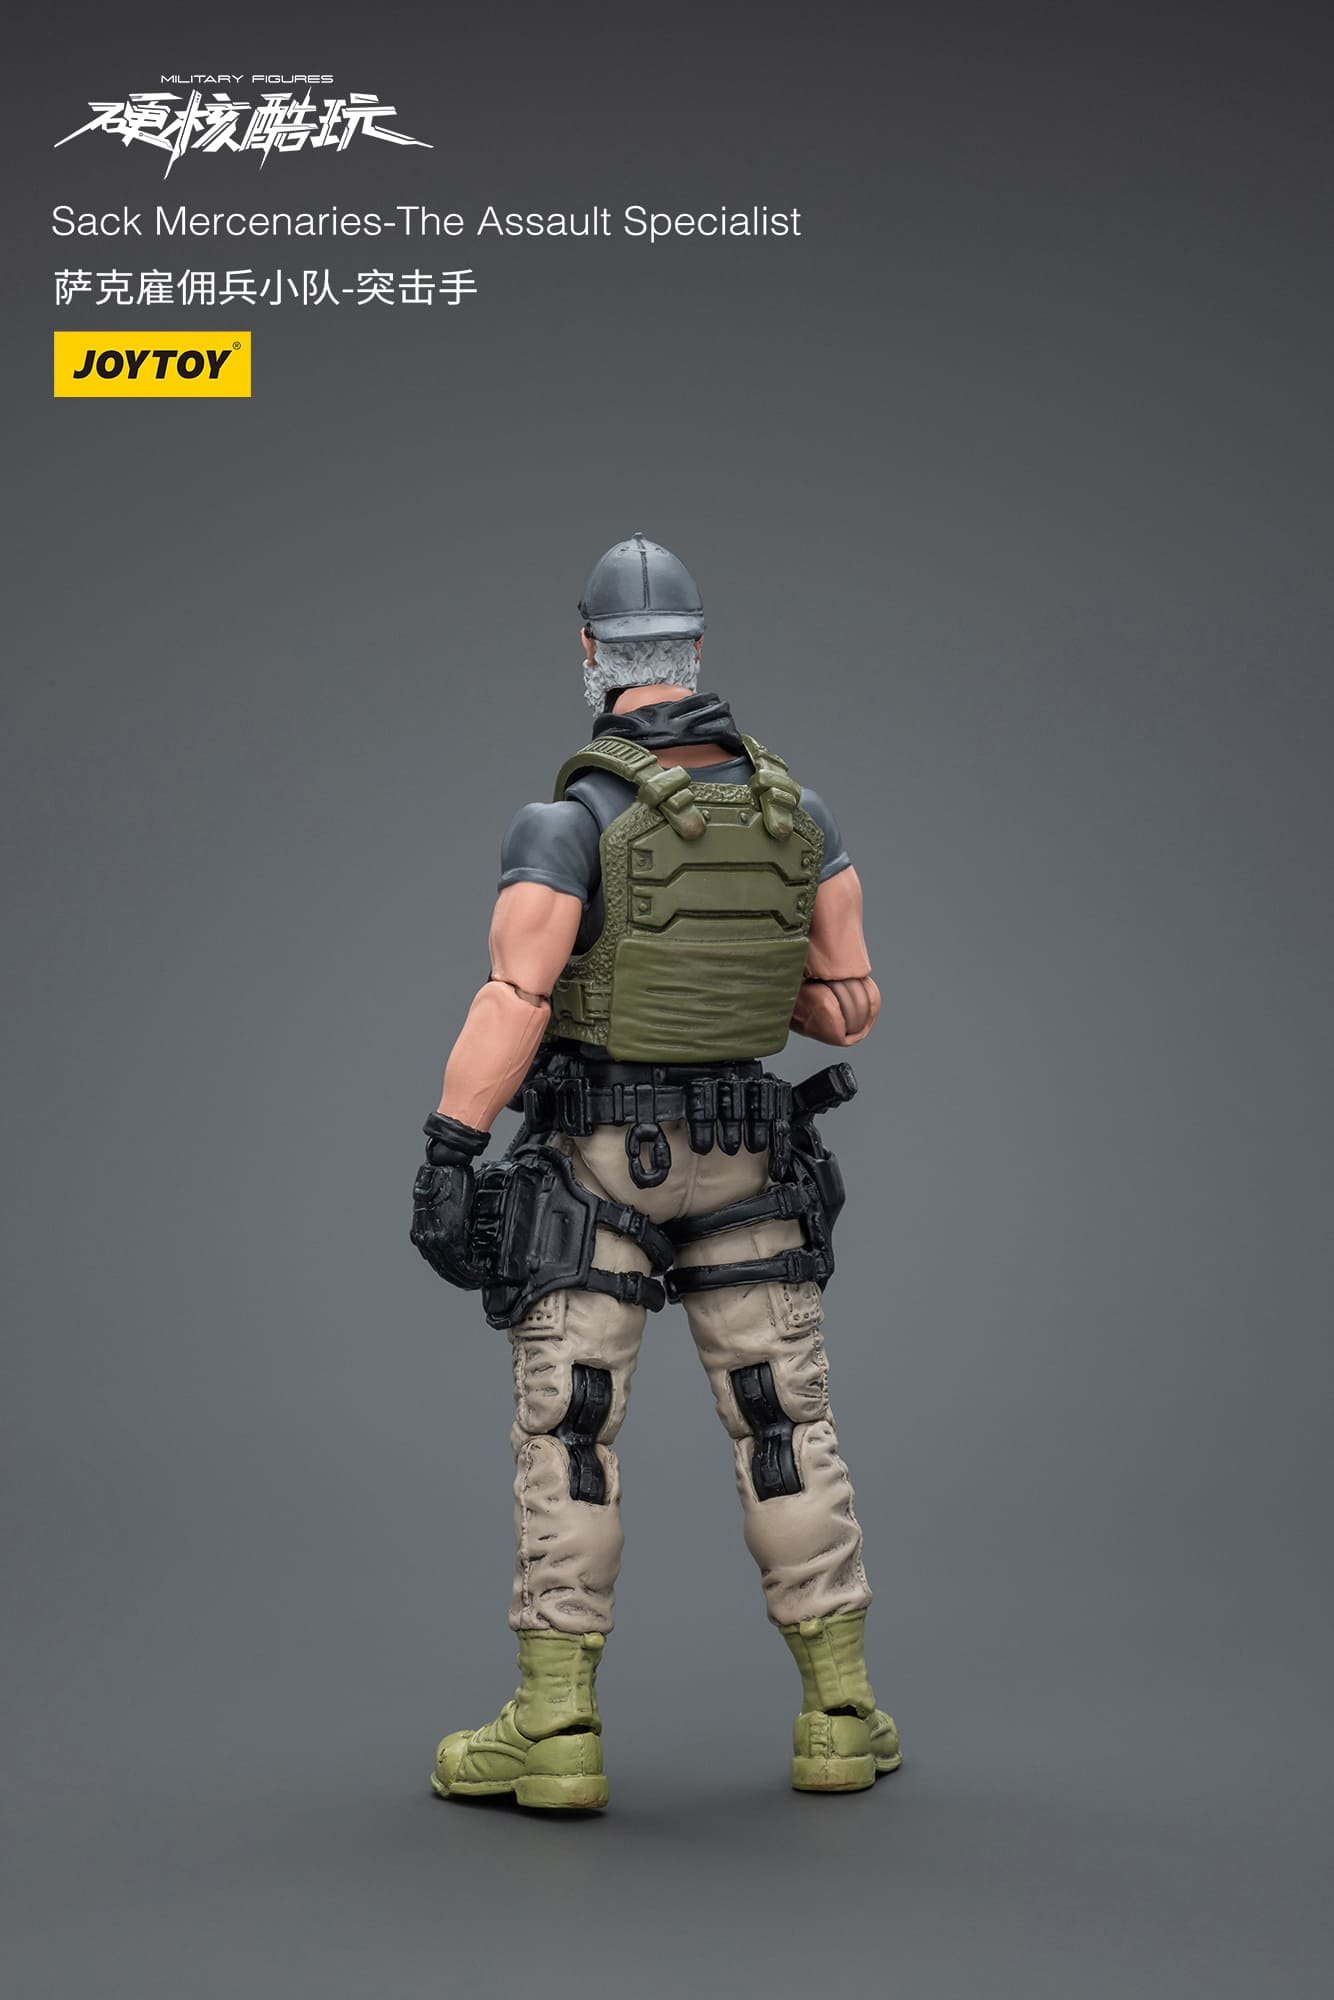 Sack Mercenaries The Assault Specialist 2 - Joytoy Figure